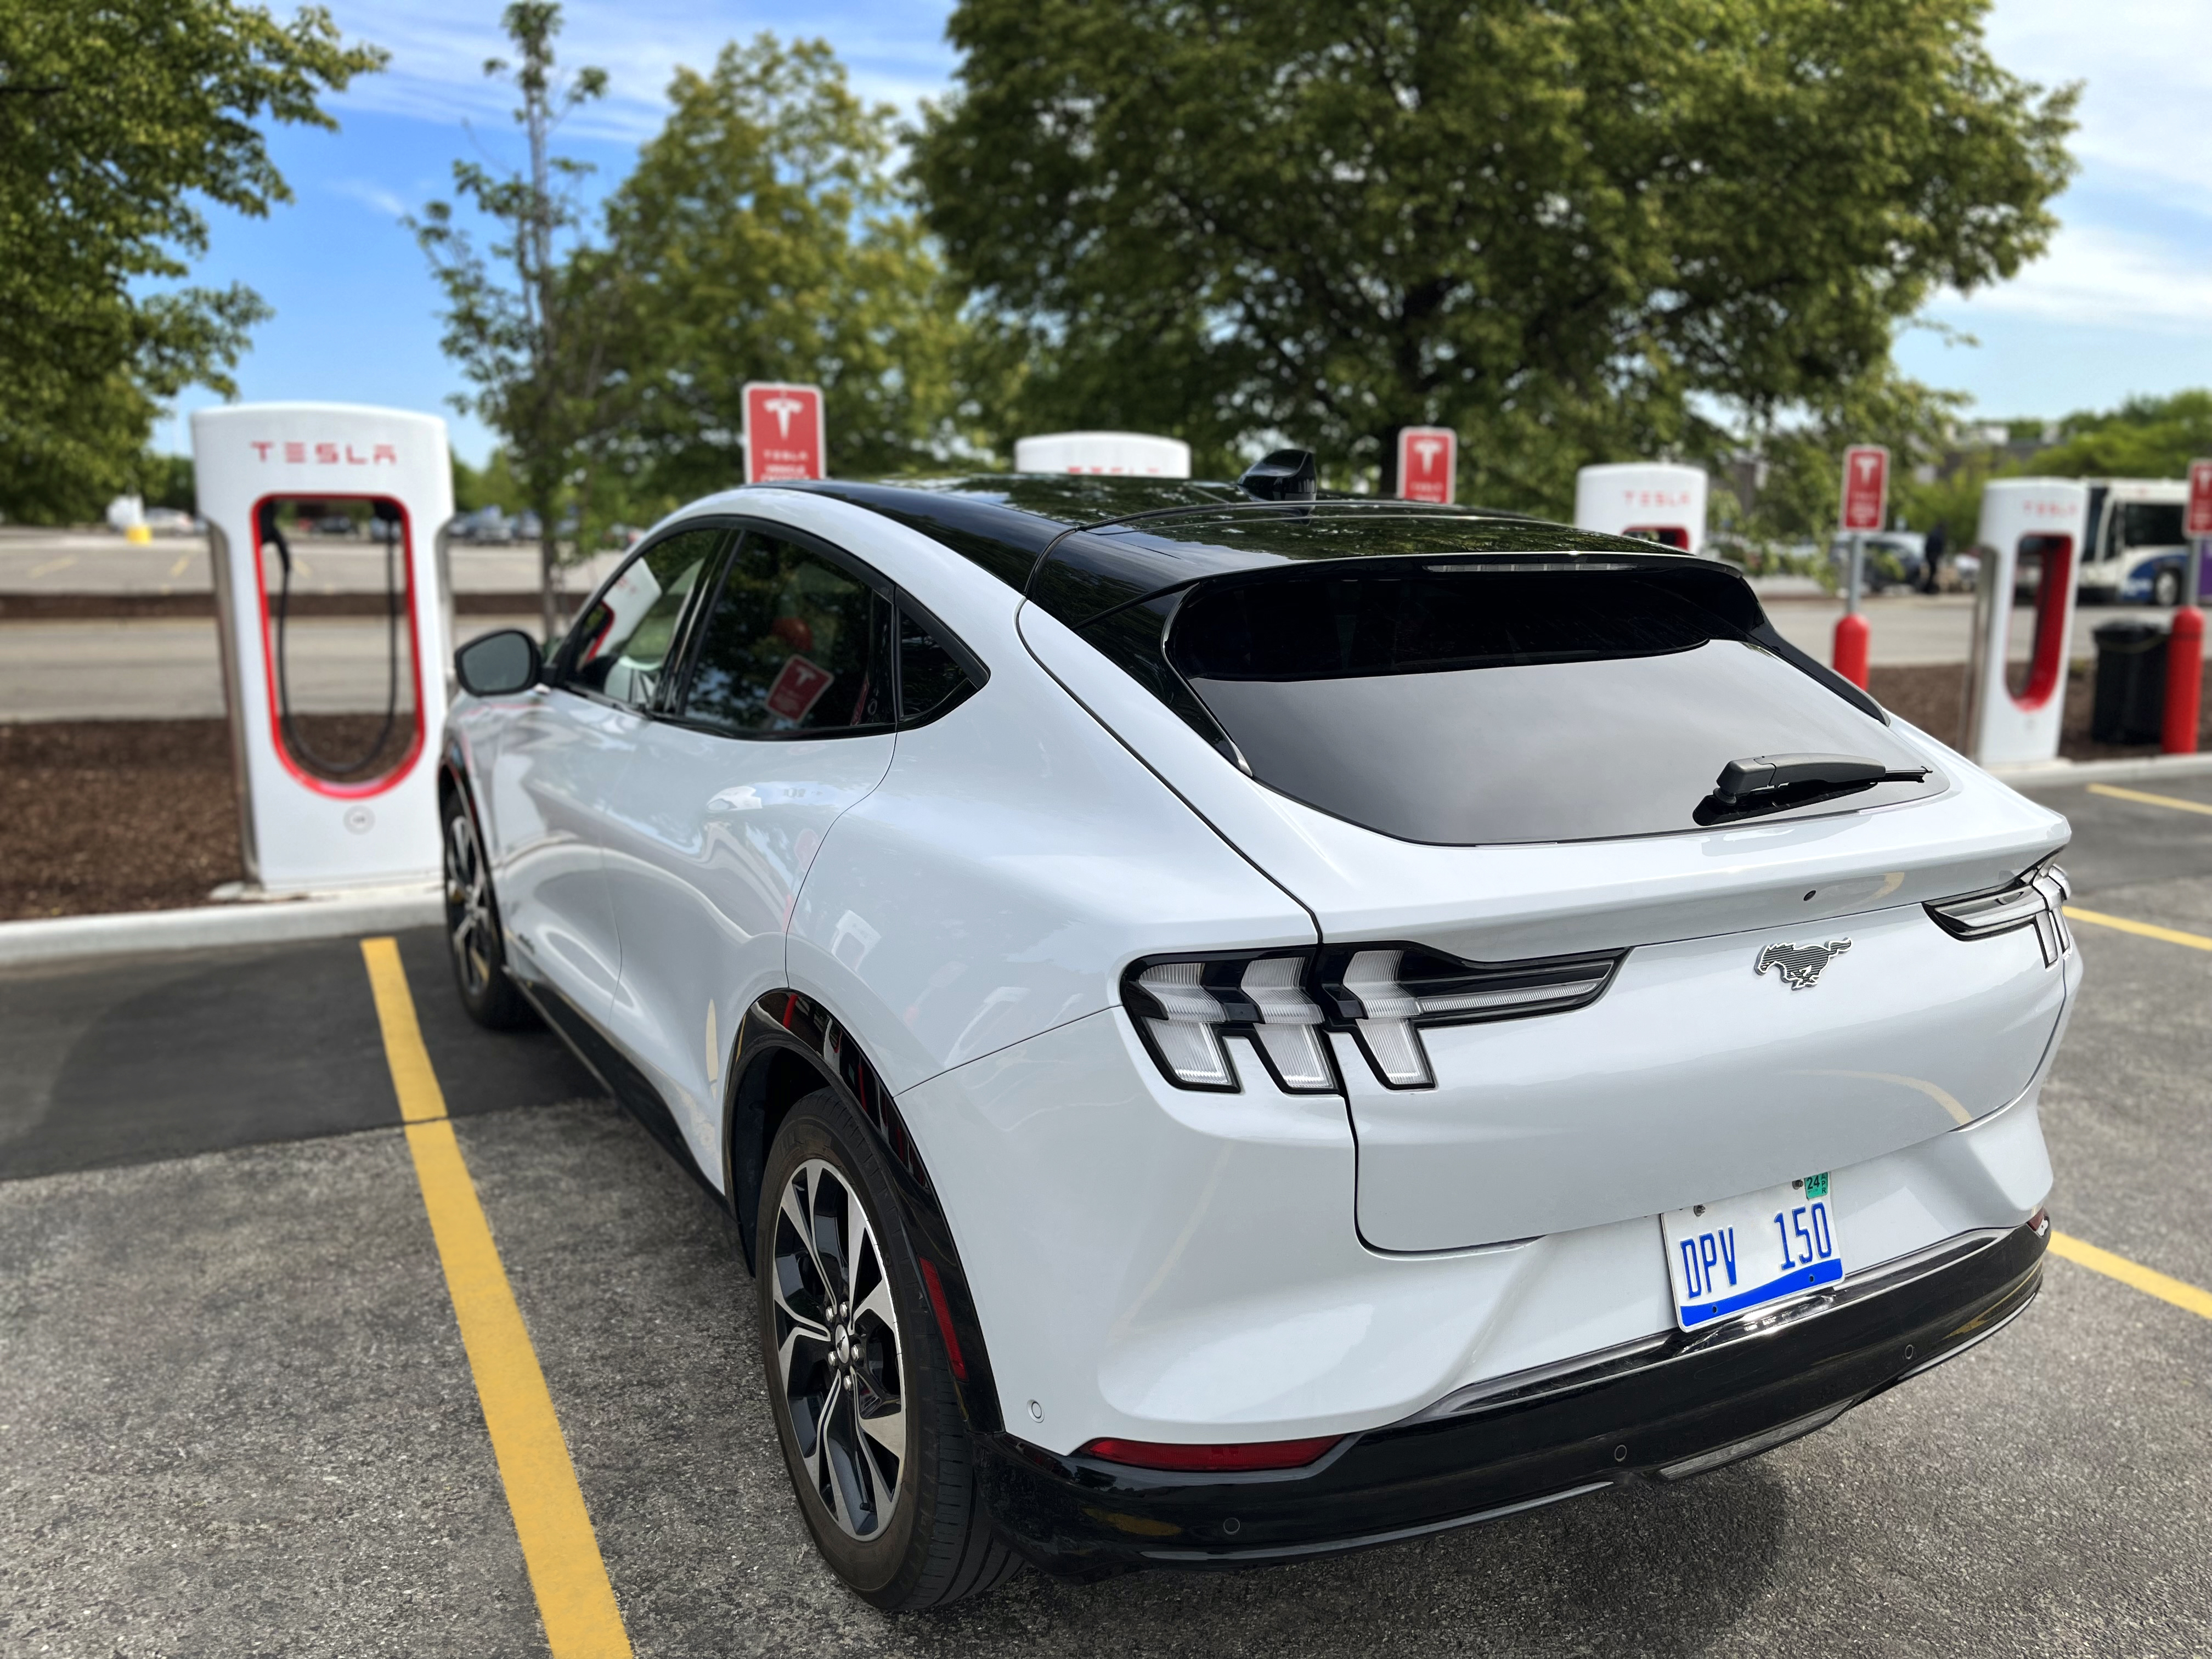 Ford EV charging at a Tesla Supercharger